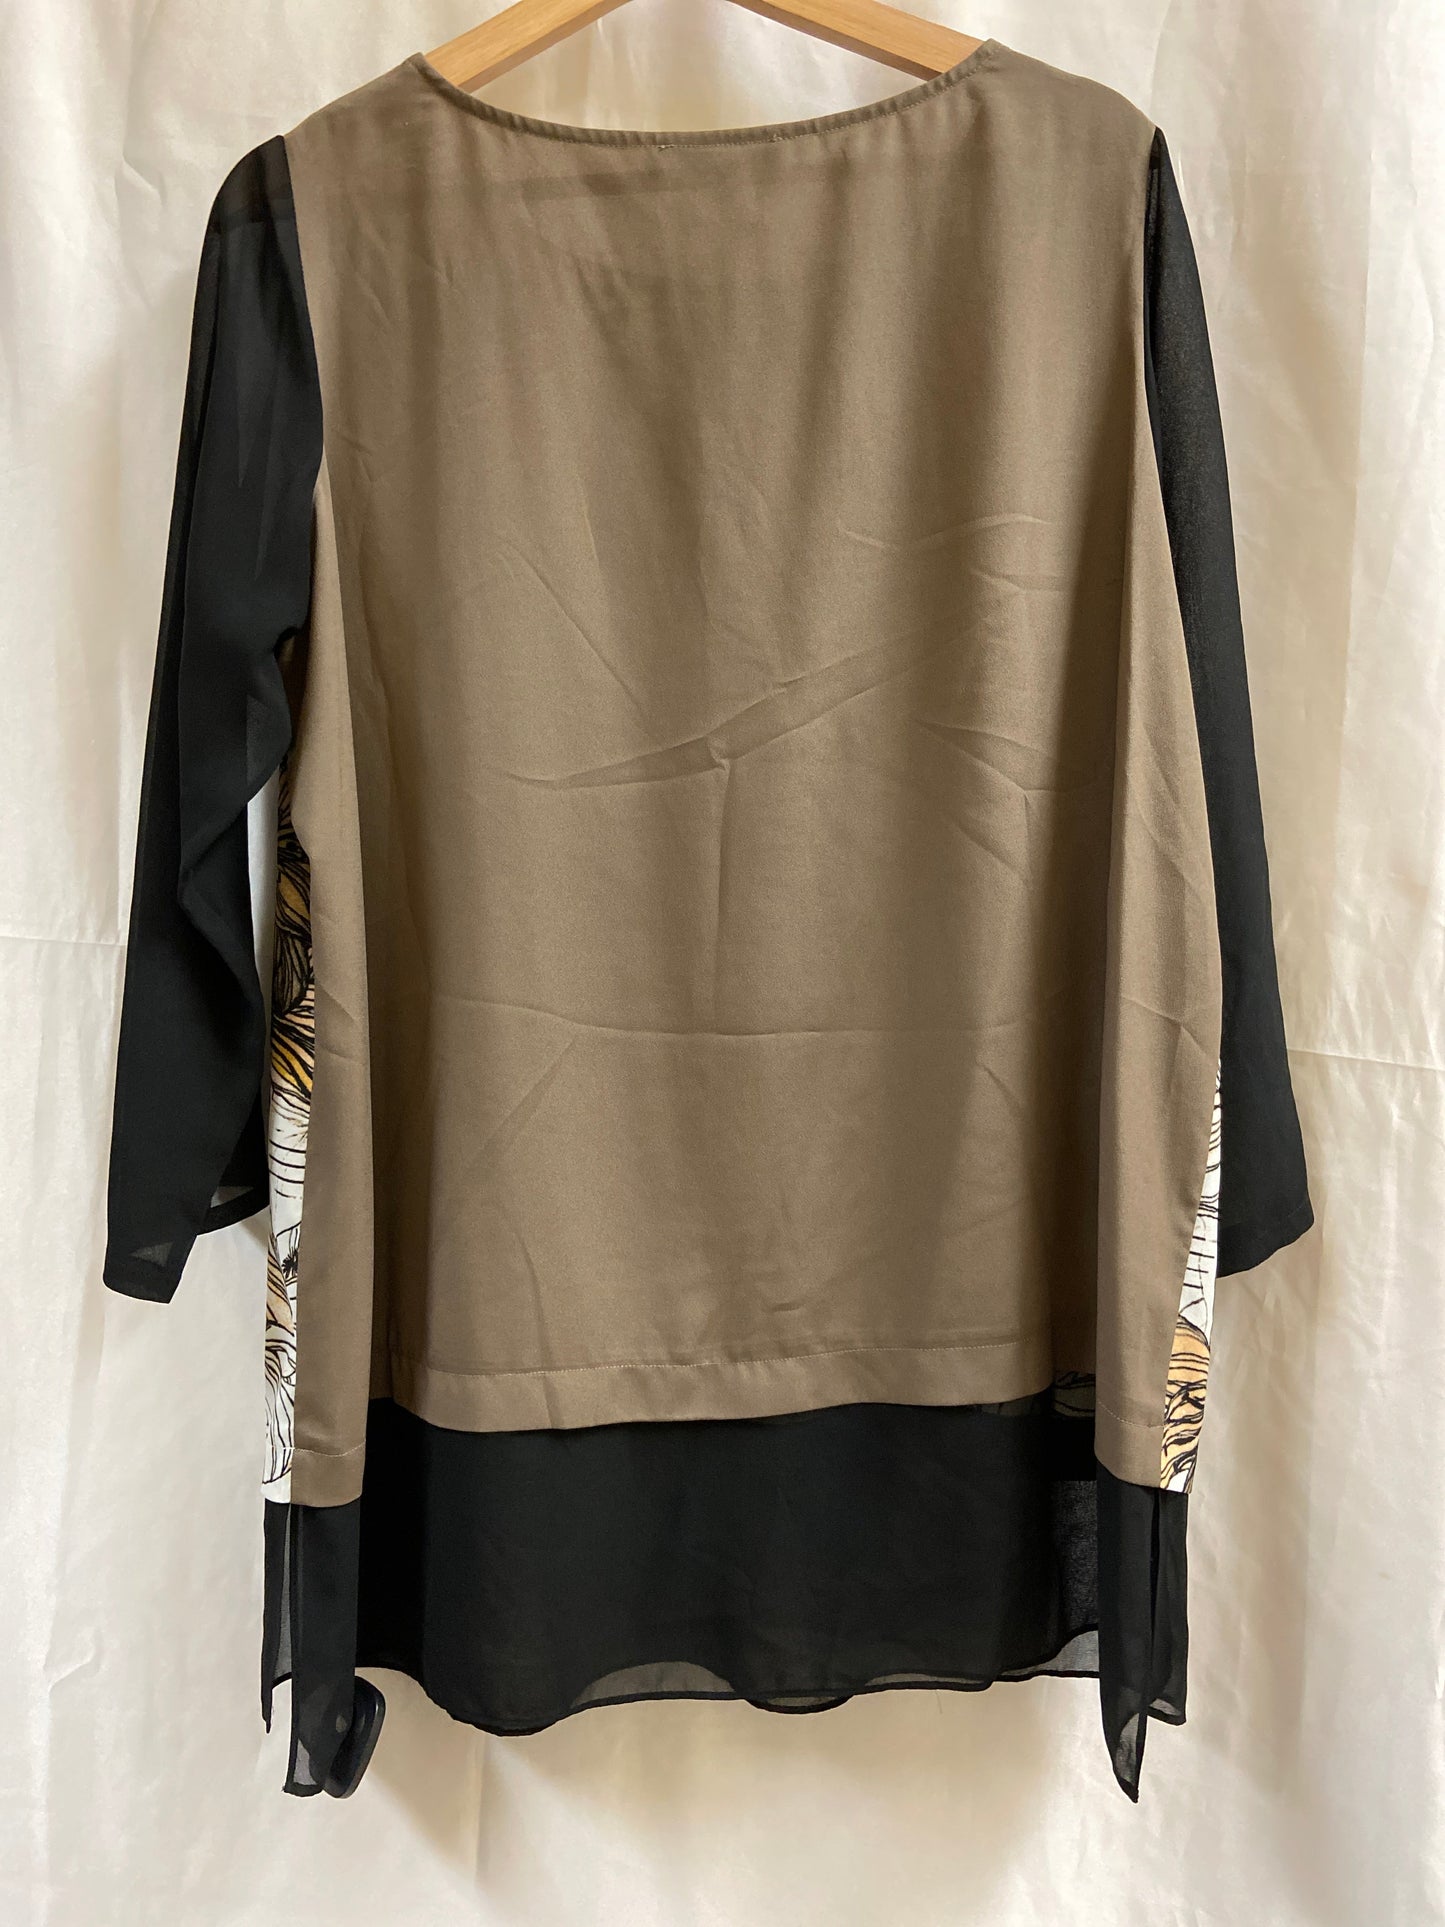 Top Long Sleeve Basic By Dkny  Size: 1x